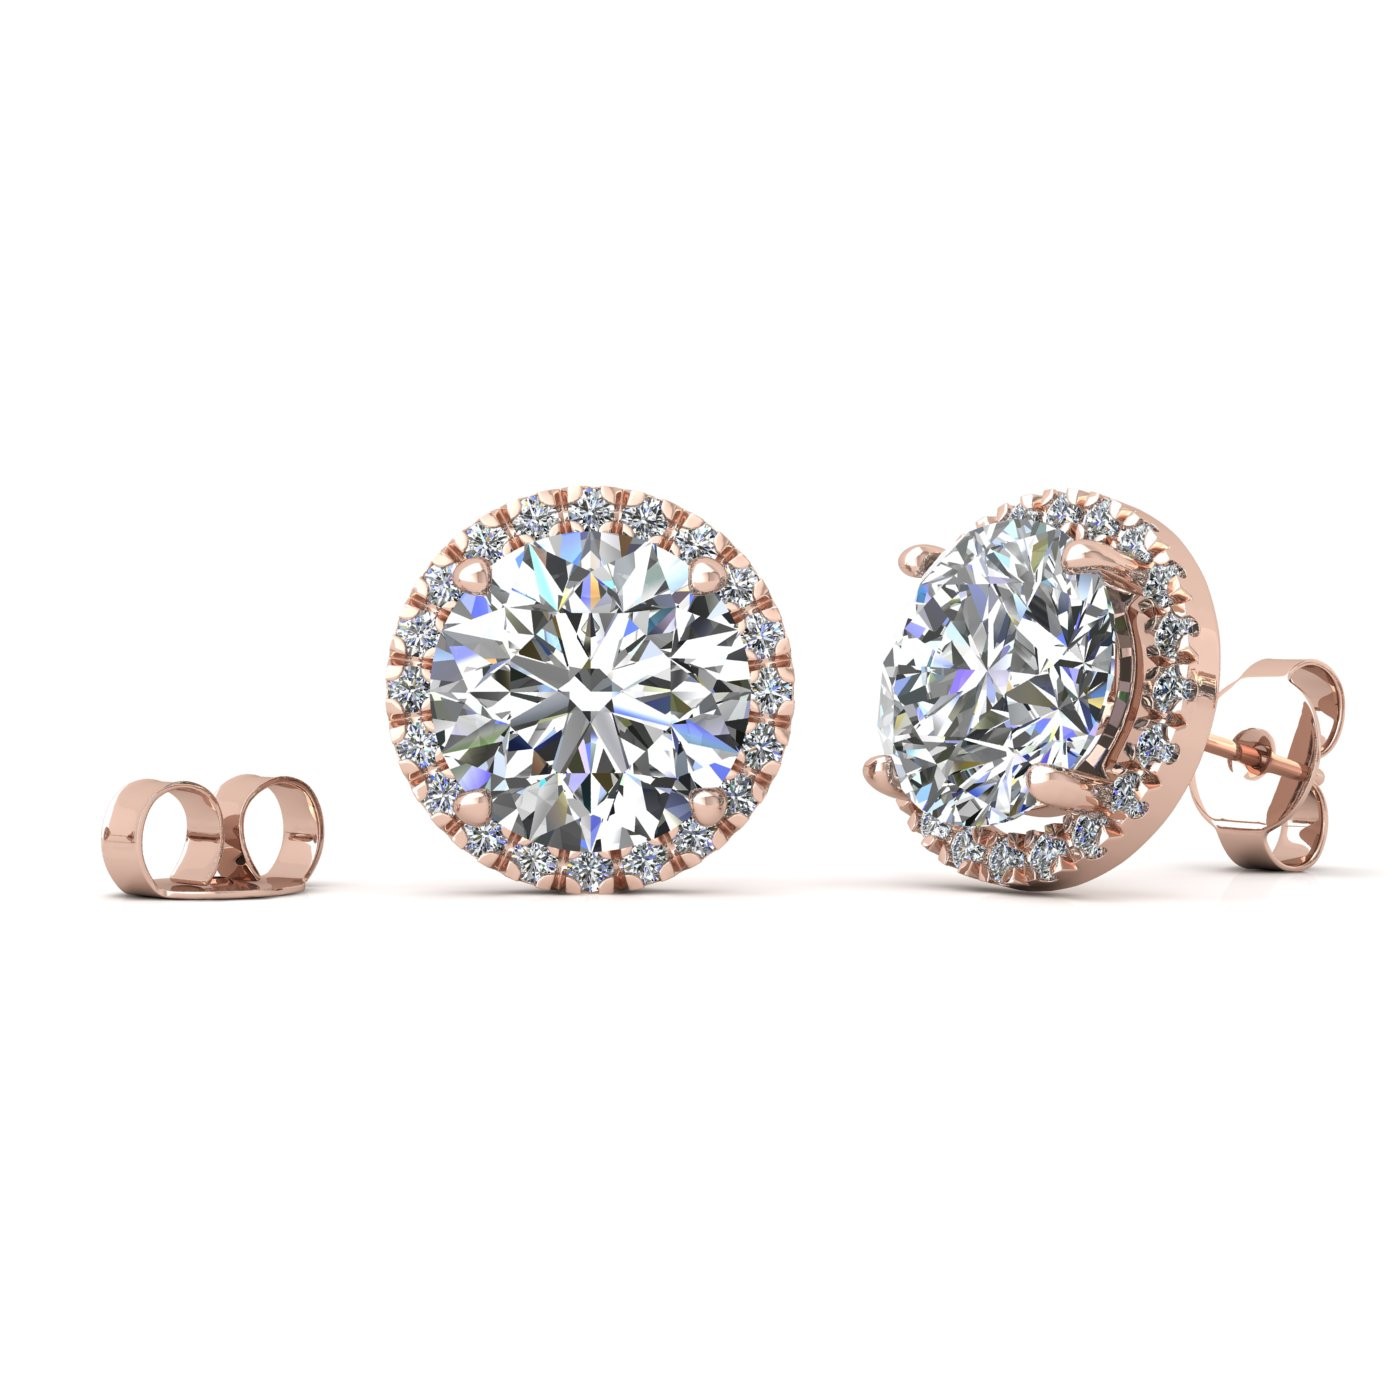 18k rose gold 2 ct each (4,0 tcw) 4 prongs round shape diamond earrings with diamond pavÉ set halo Photos & images